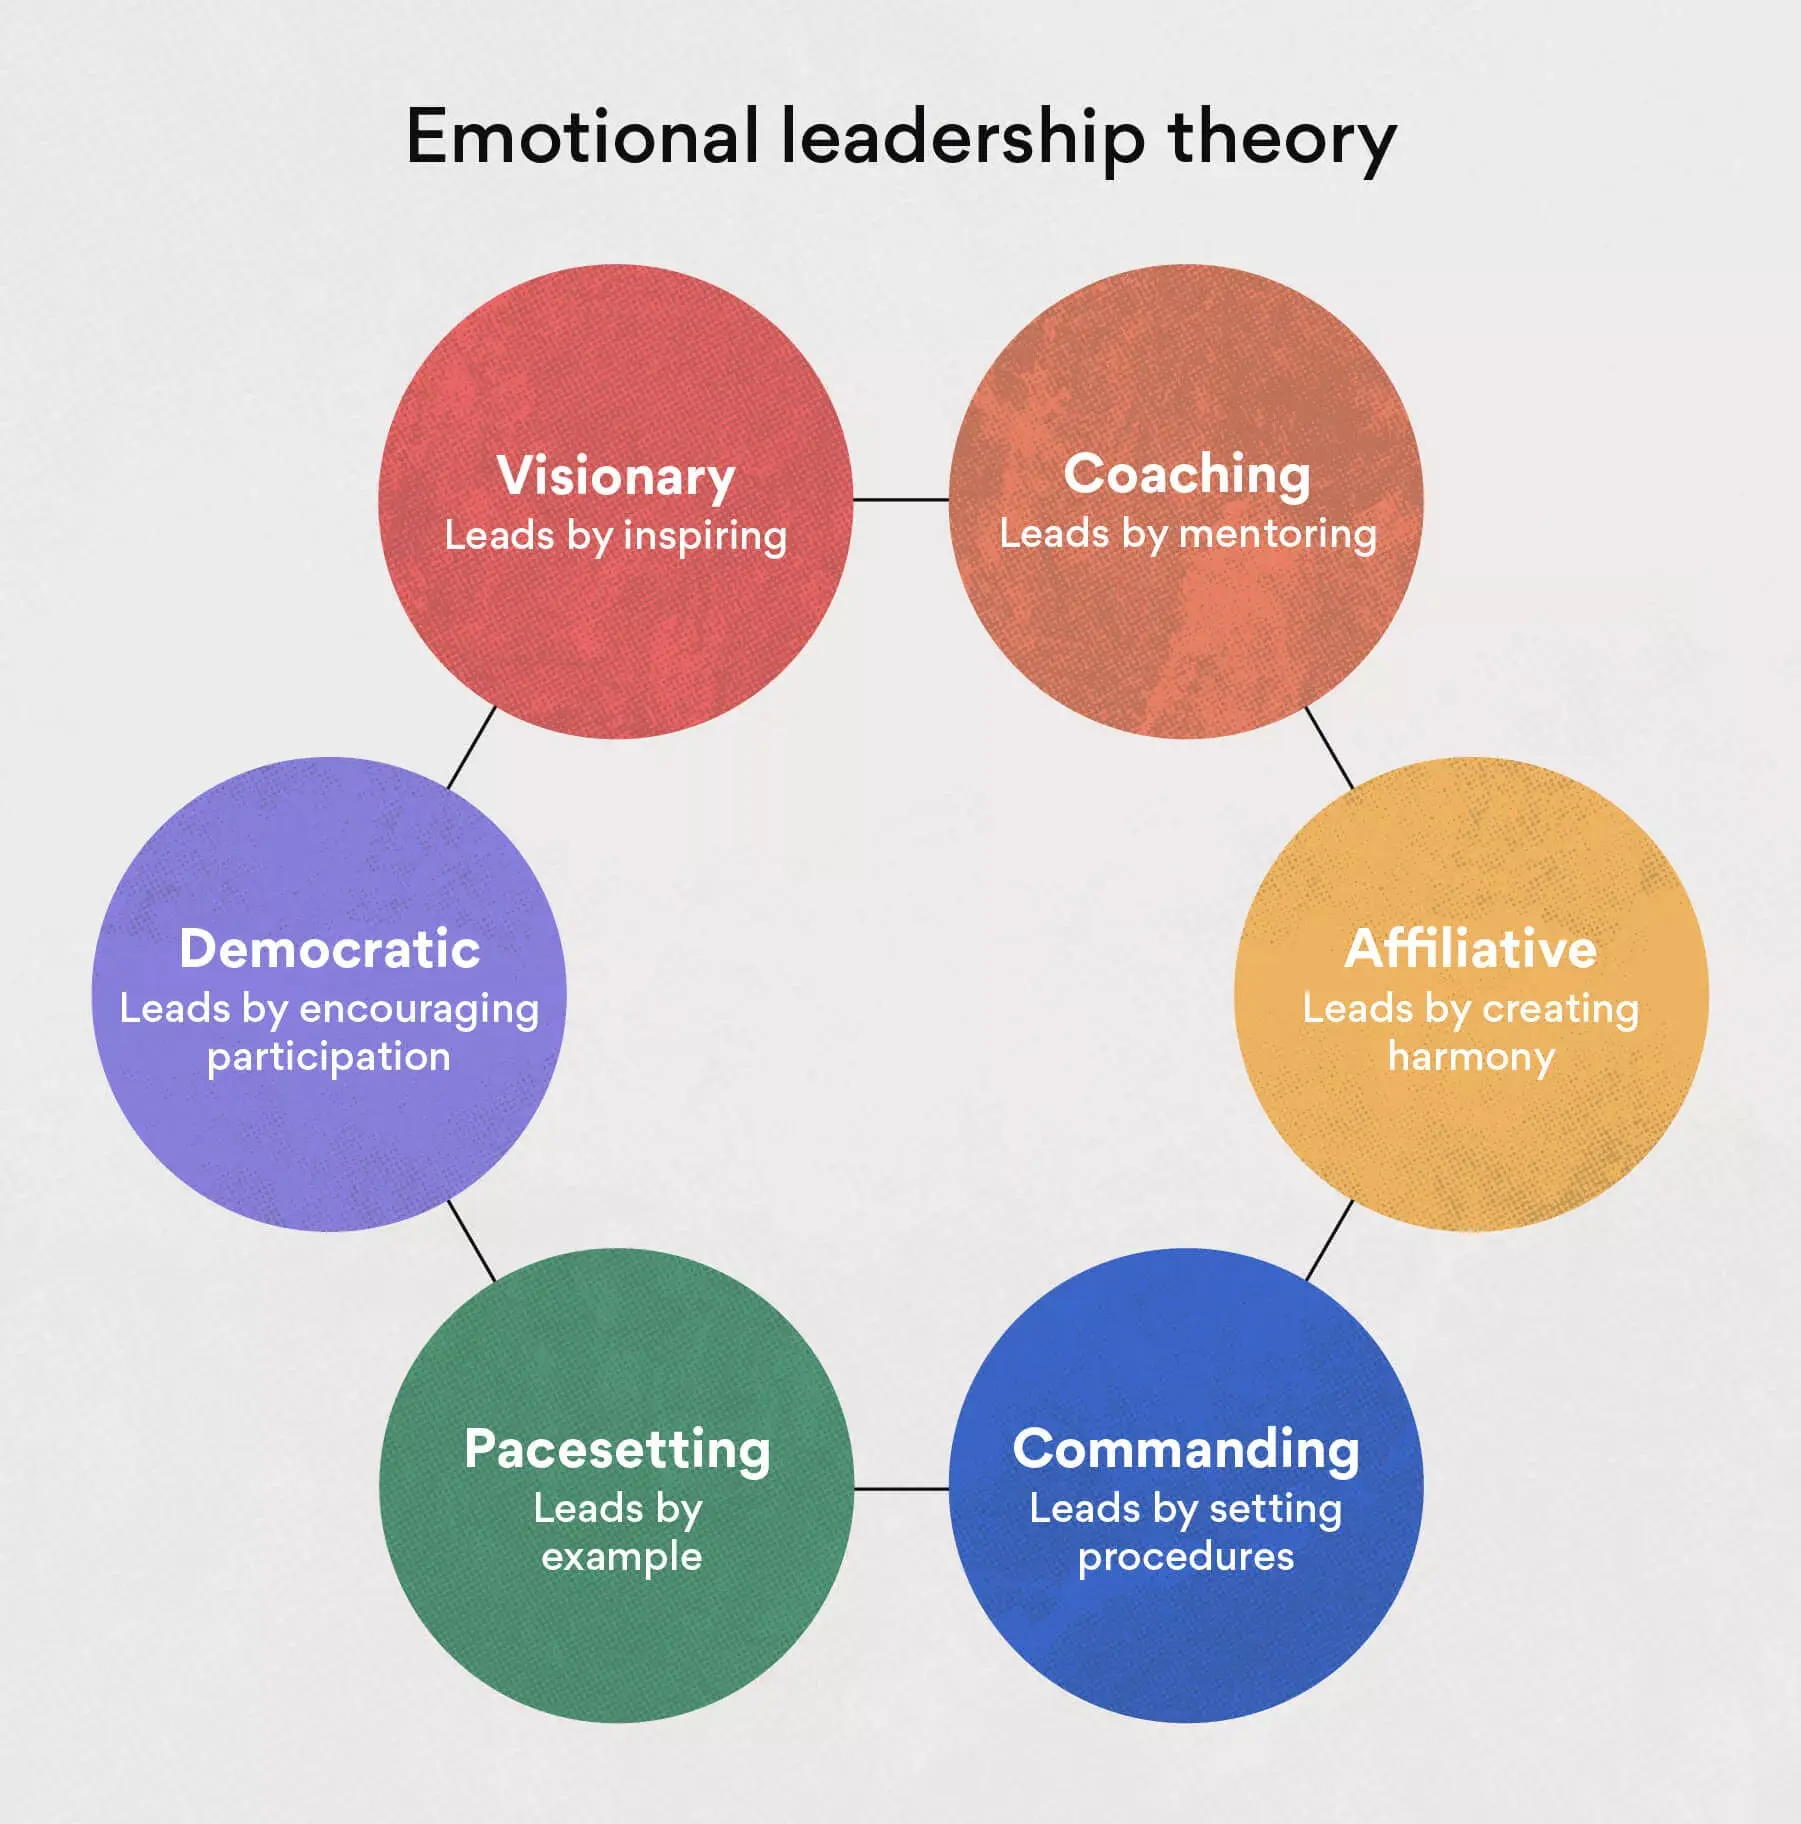 Emotional leadership theory